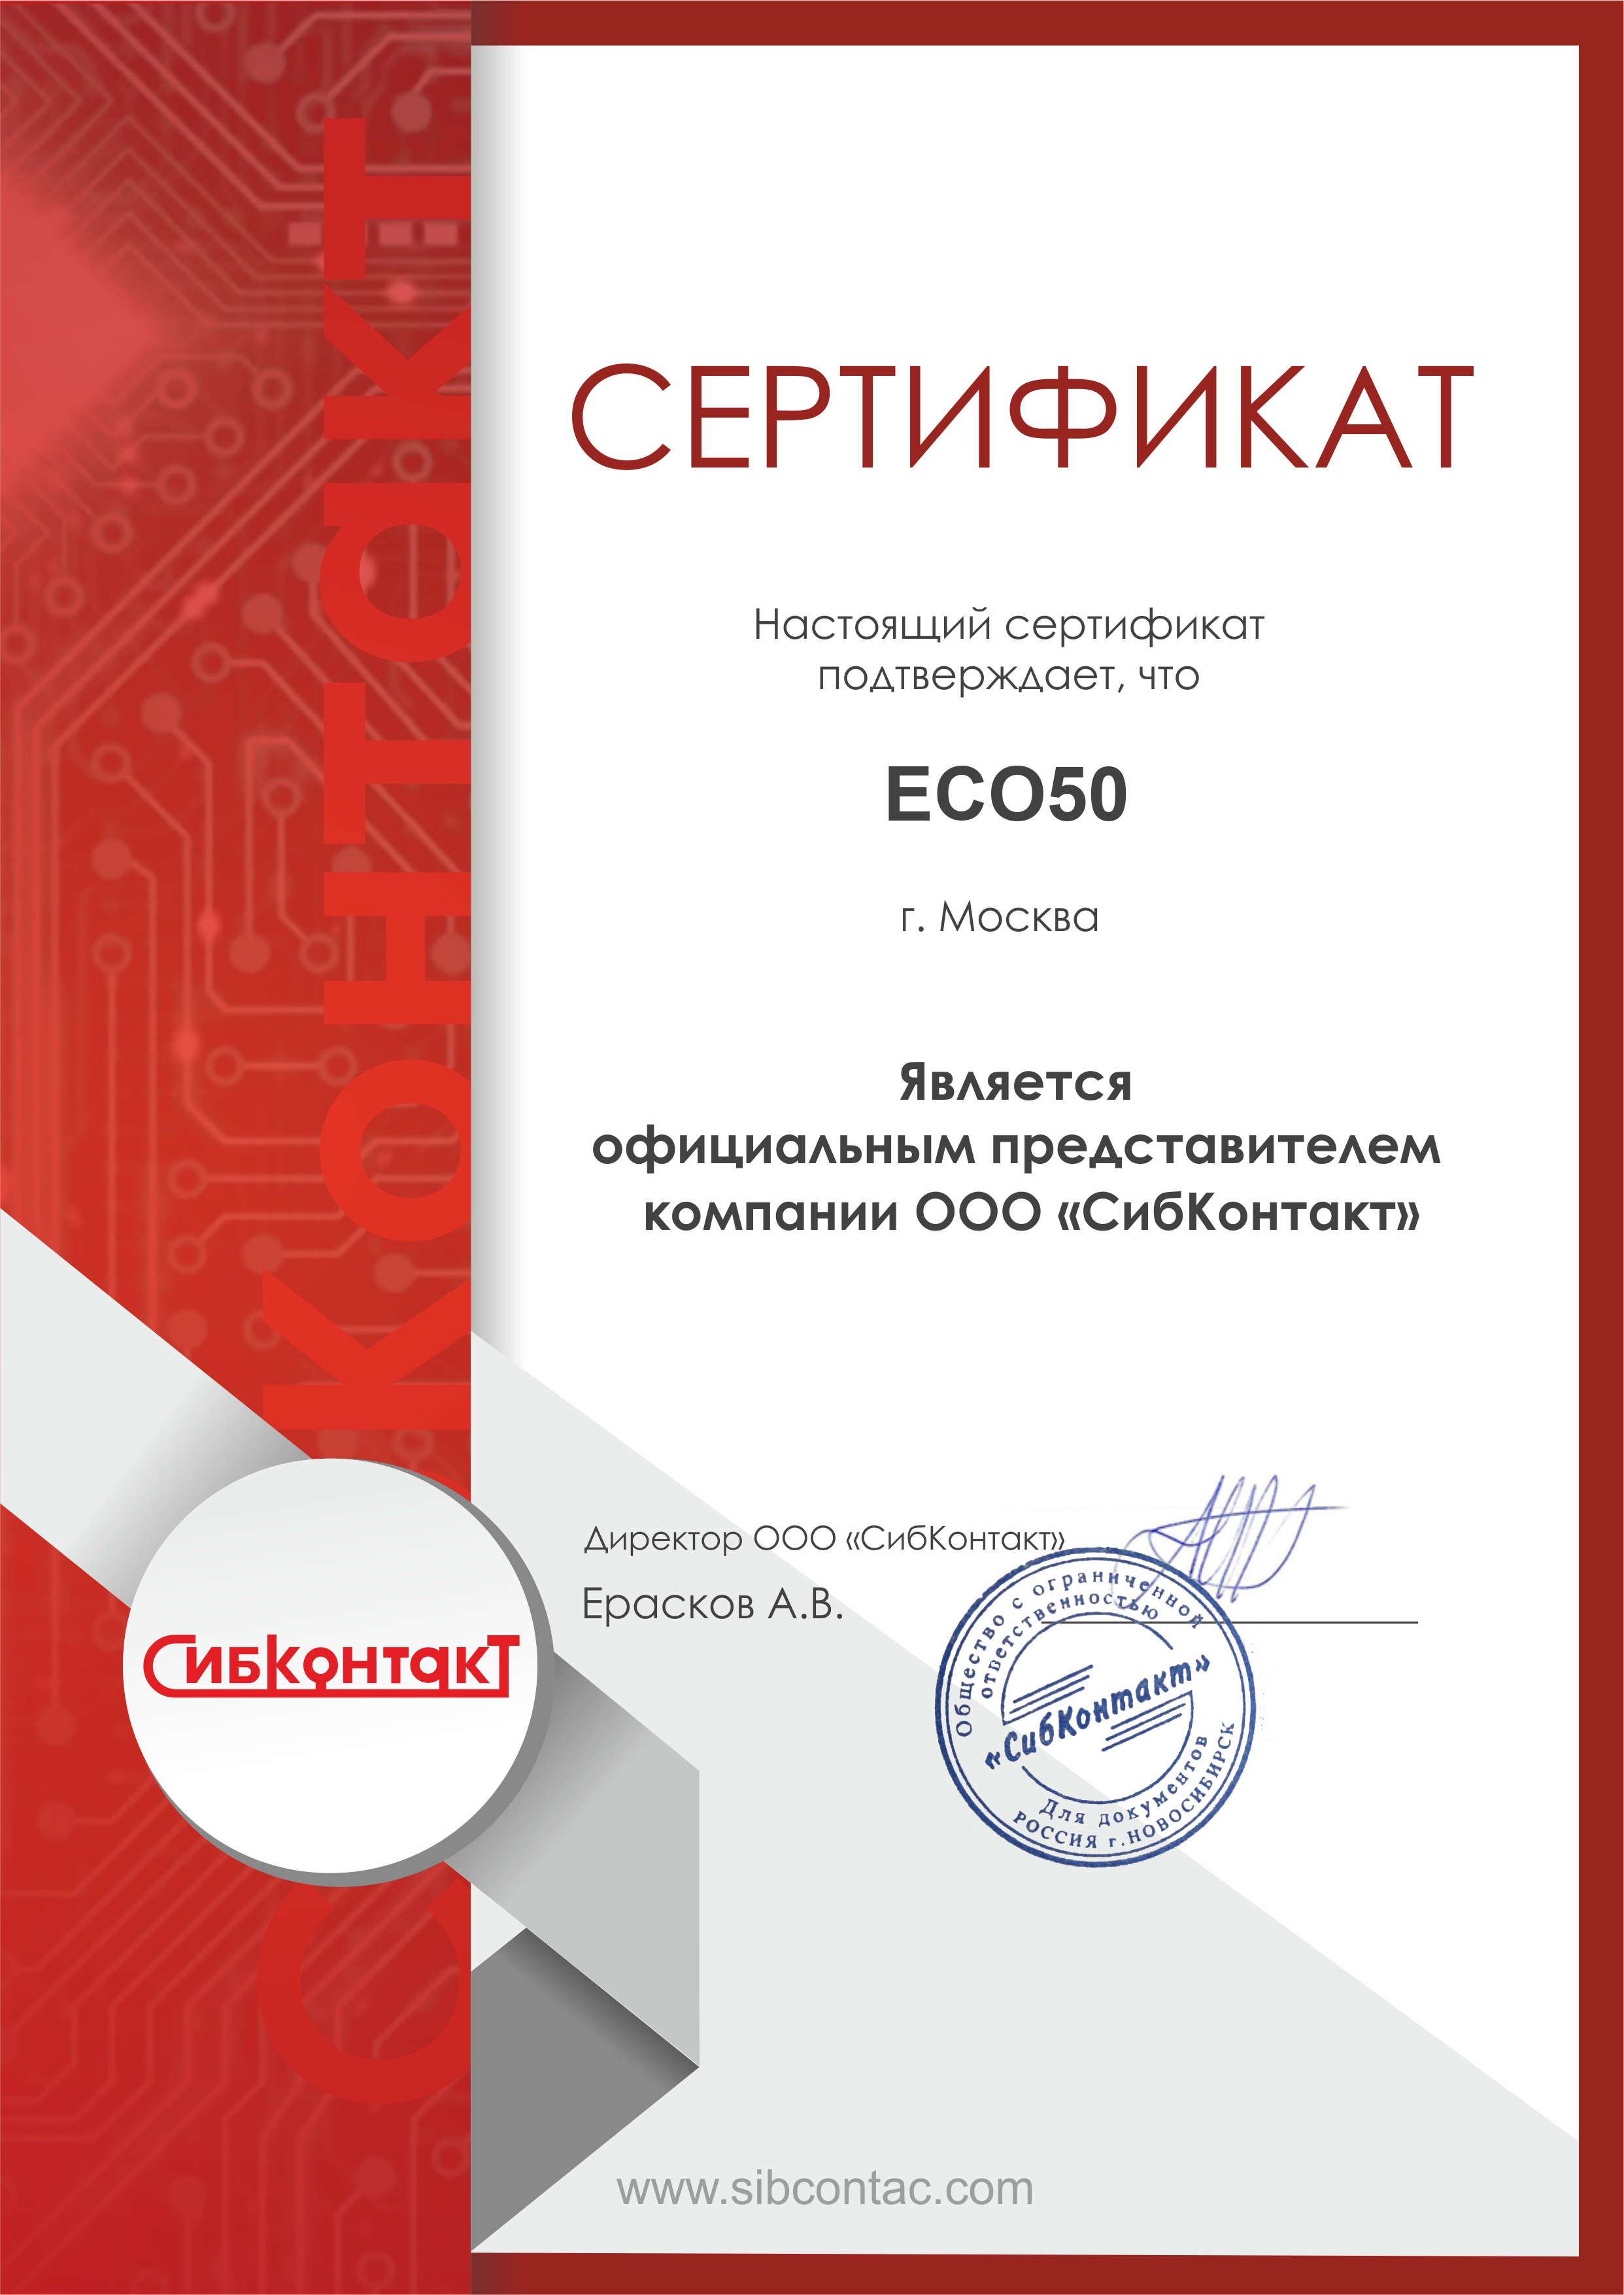 Сертификат дилера Сибконтакт